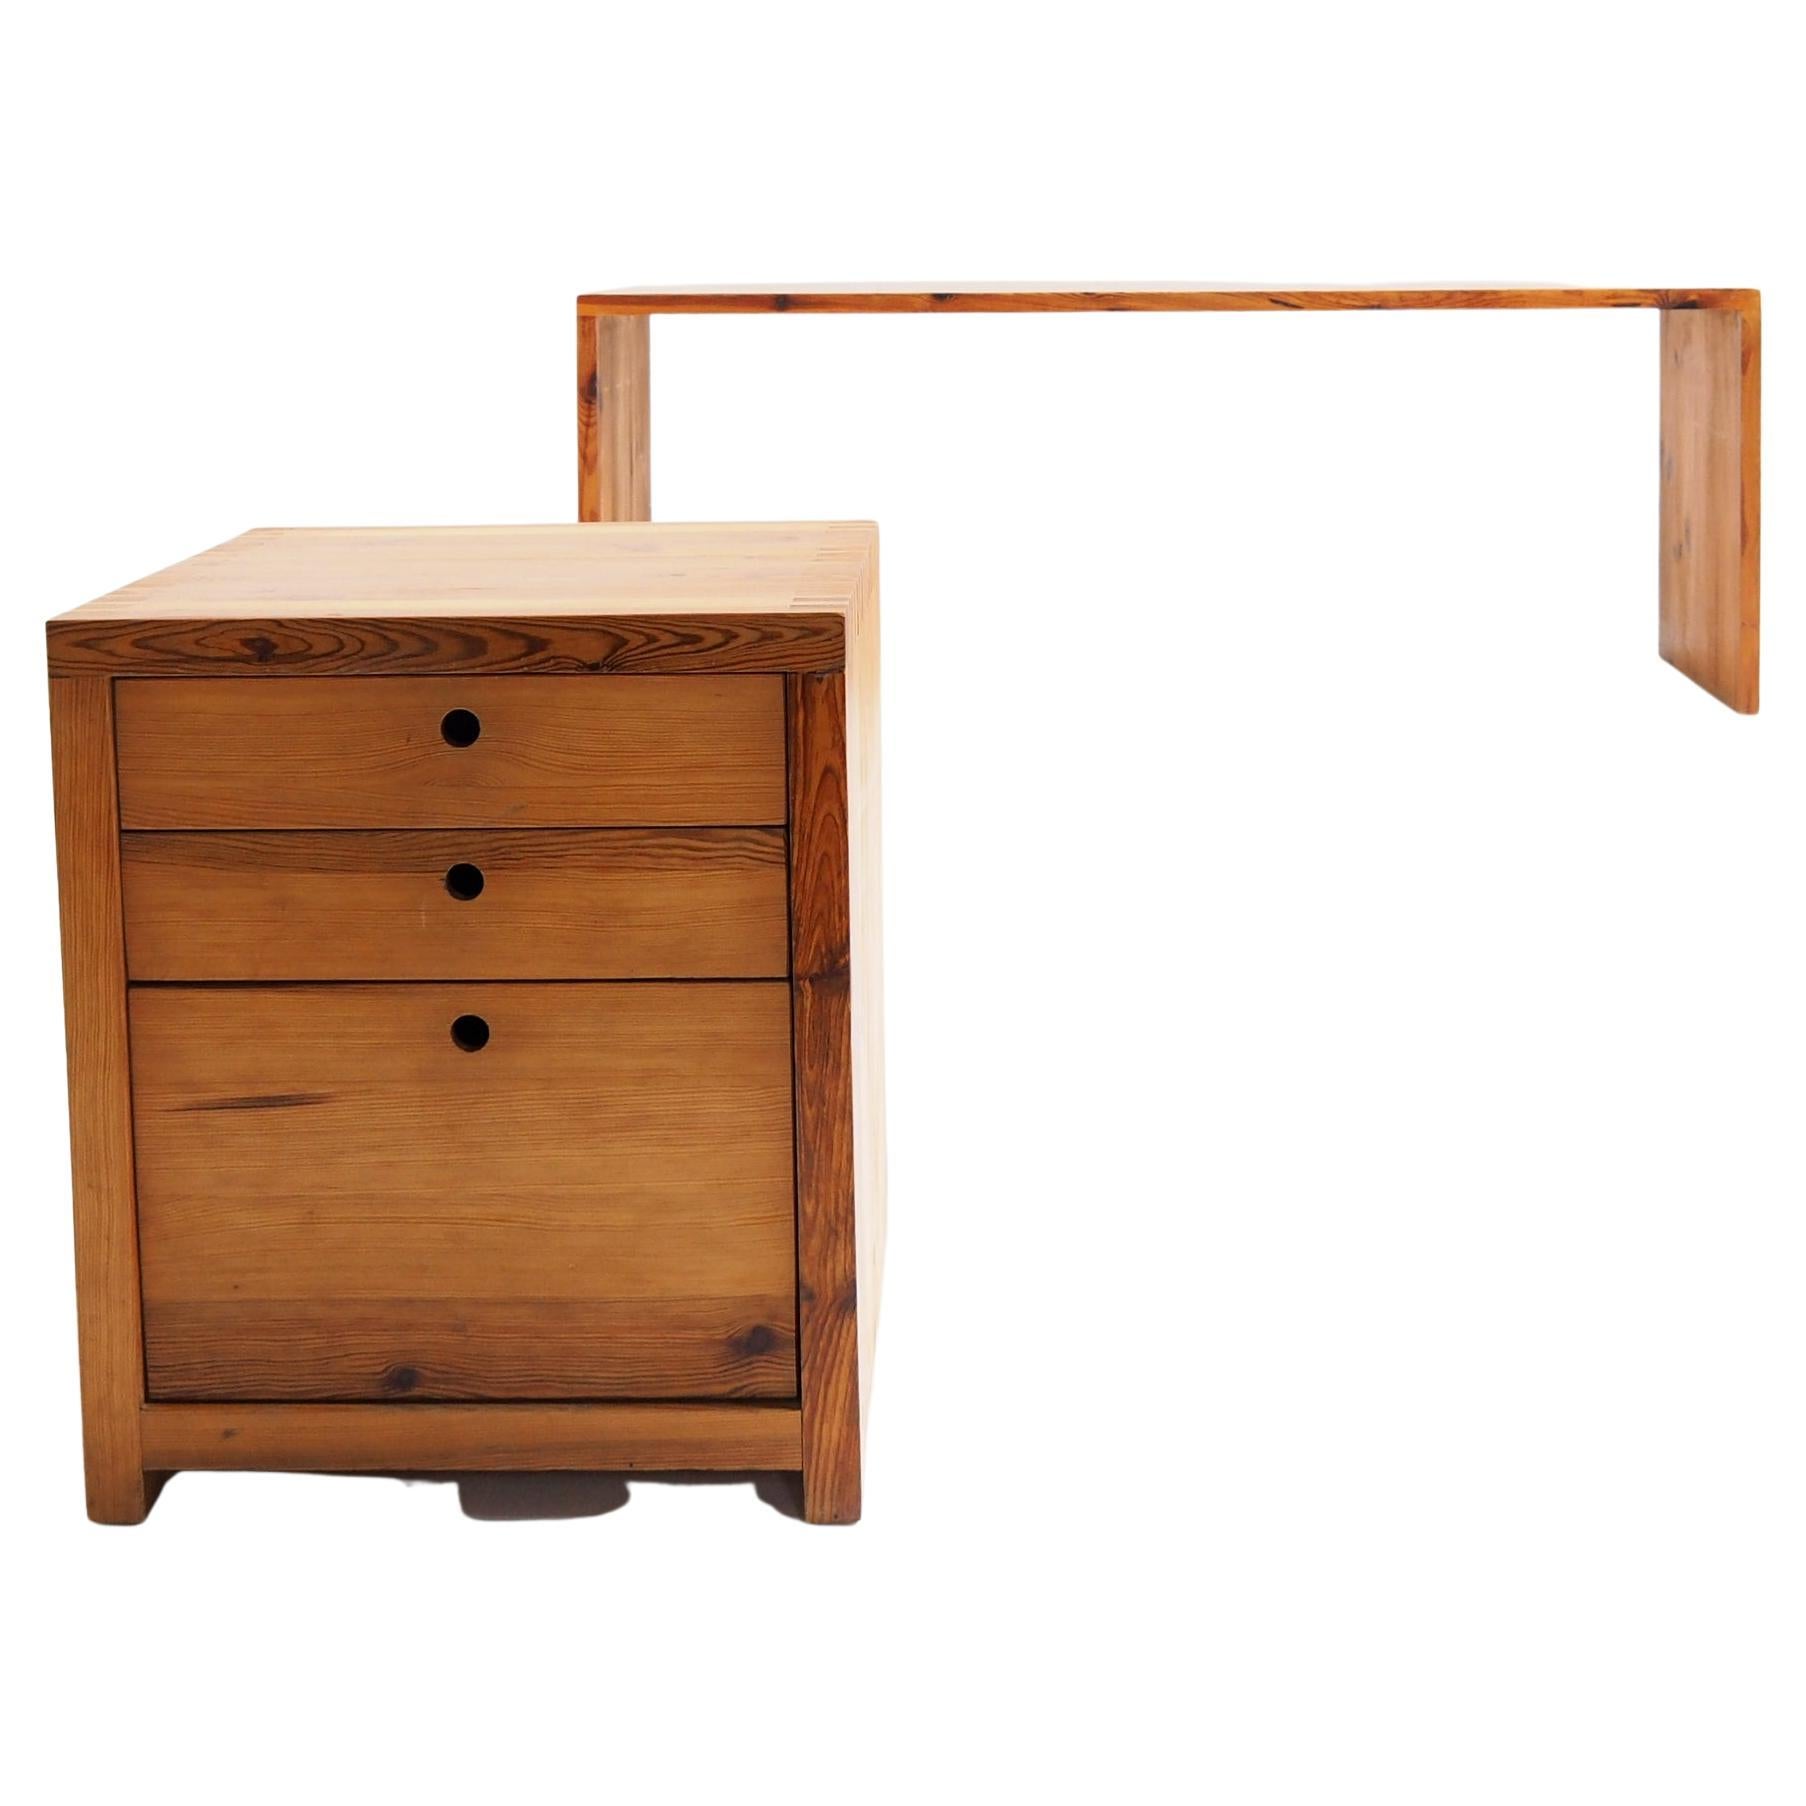 Desk with Drawer Unit in Solid Pine by Dutch Designer Ate Van Apeldoorn For Sale